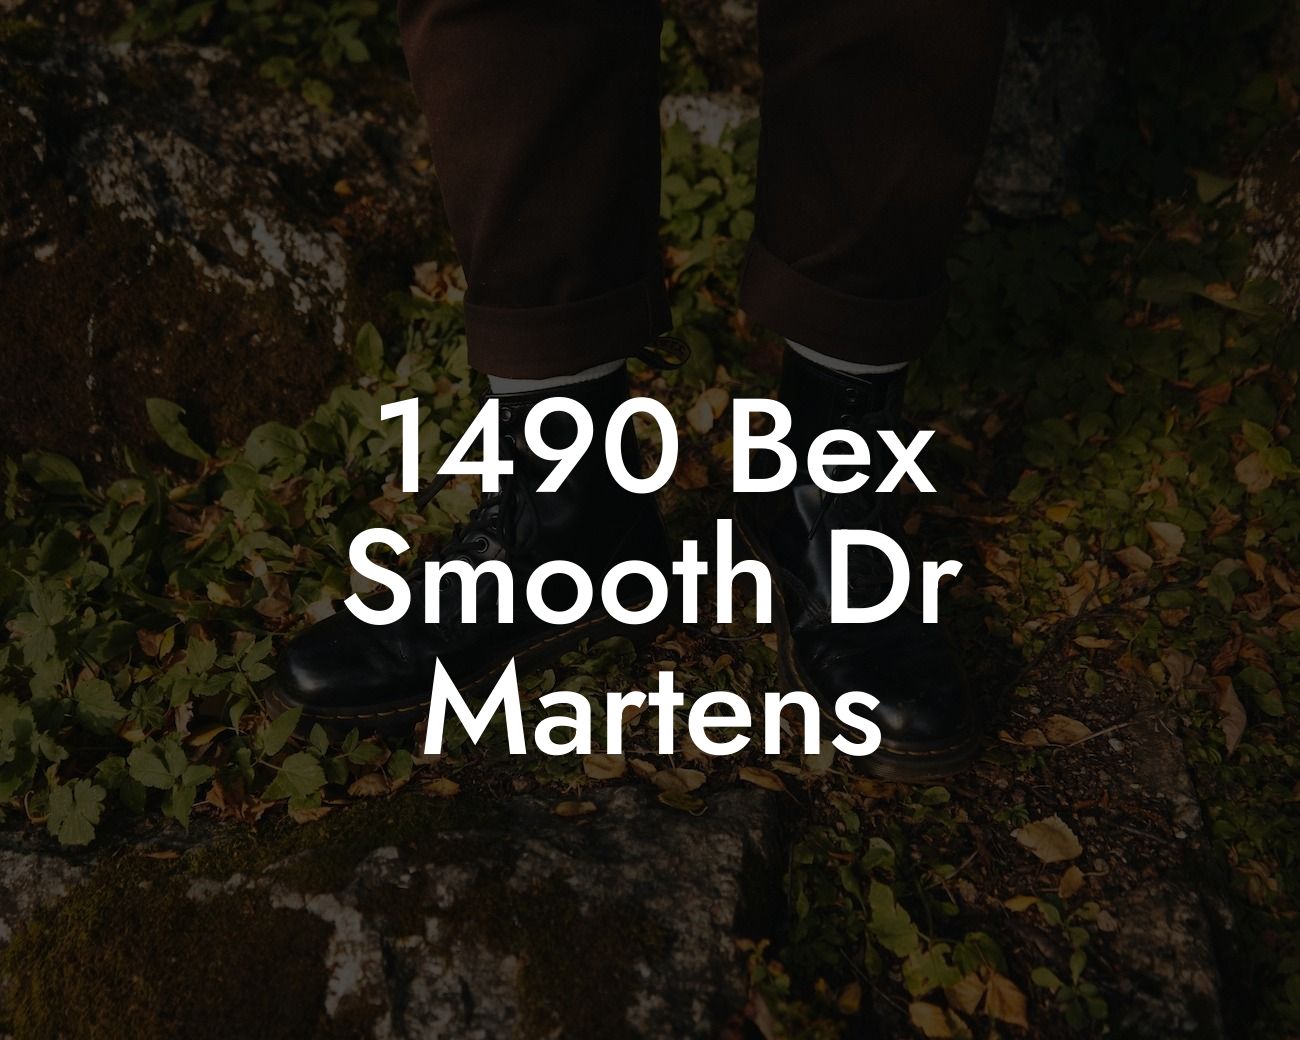 1490 Bex Smooth Dr Martens